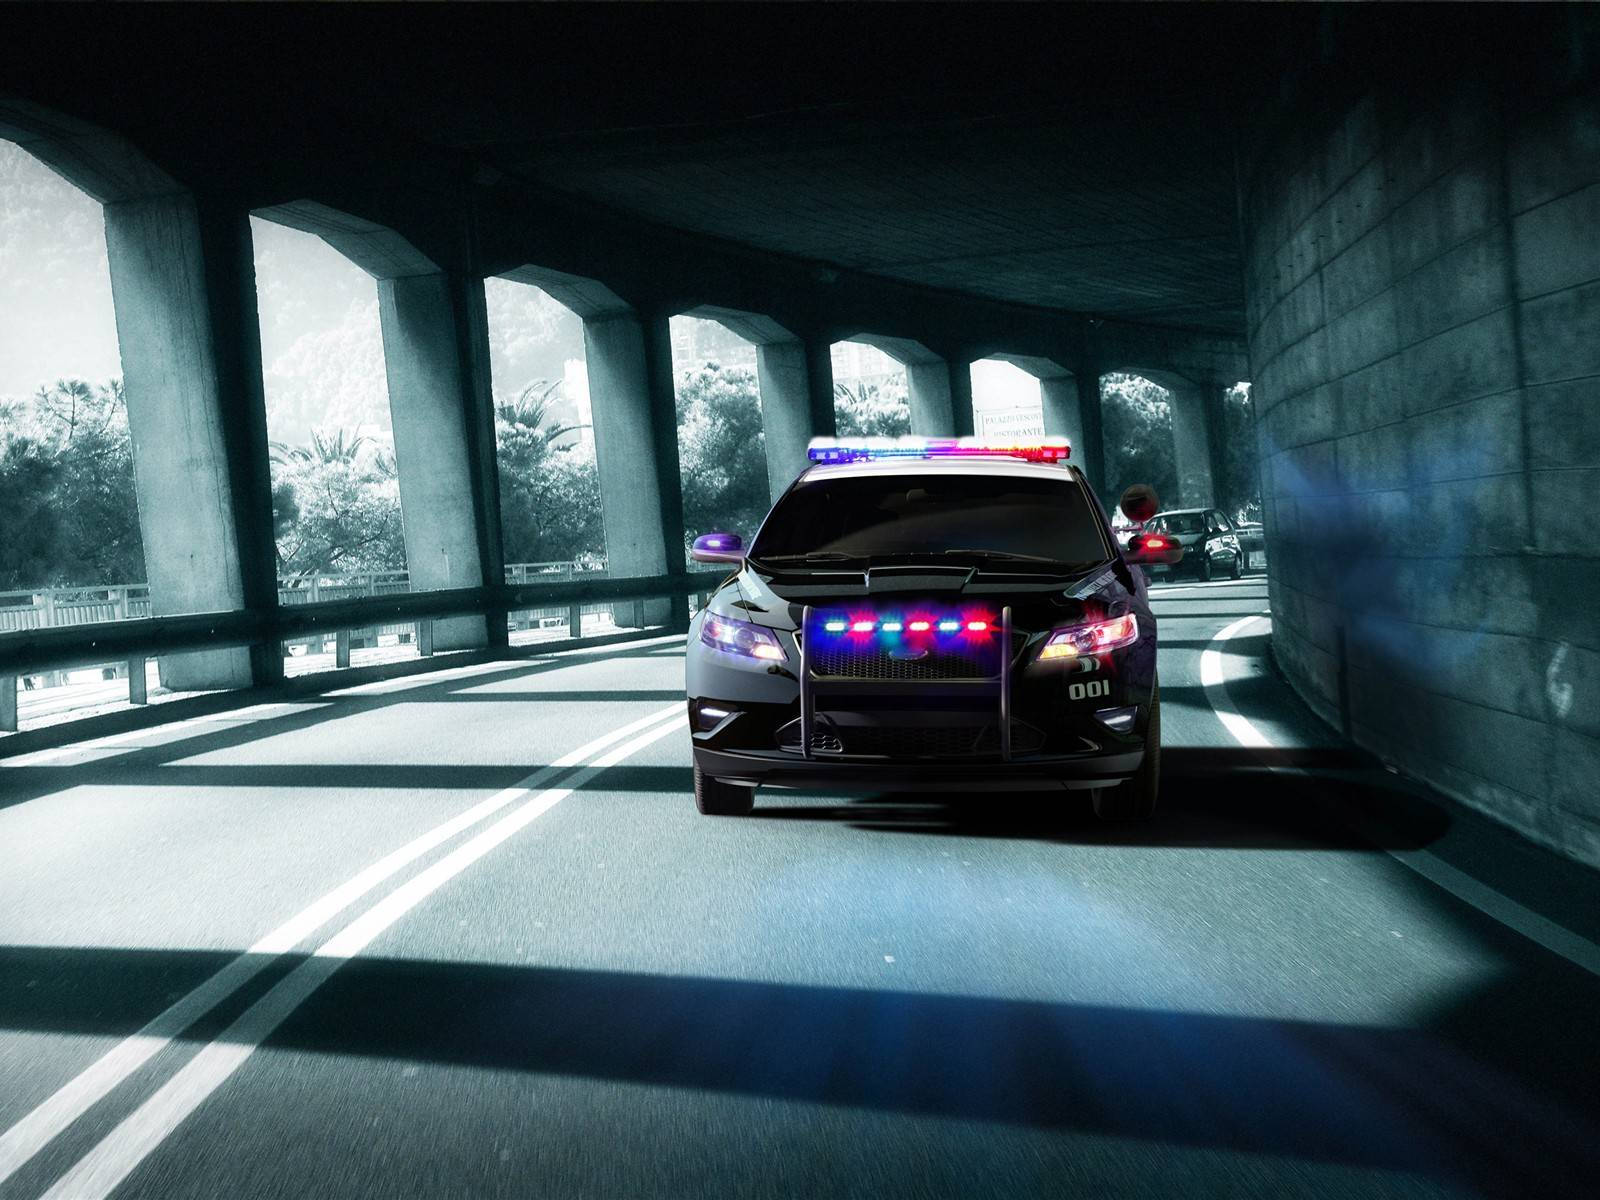 Police Car Lights Flashing